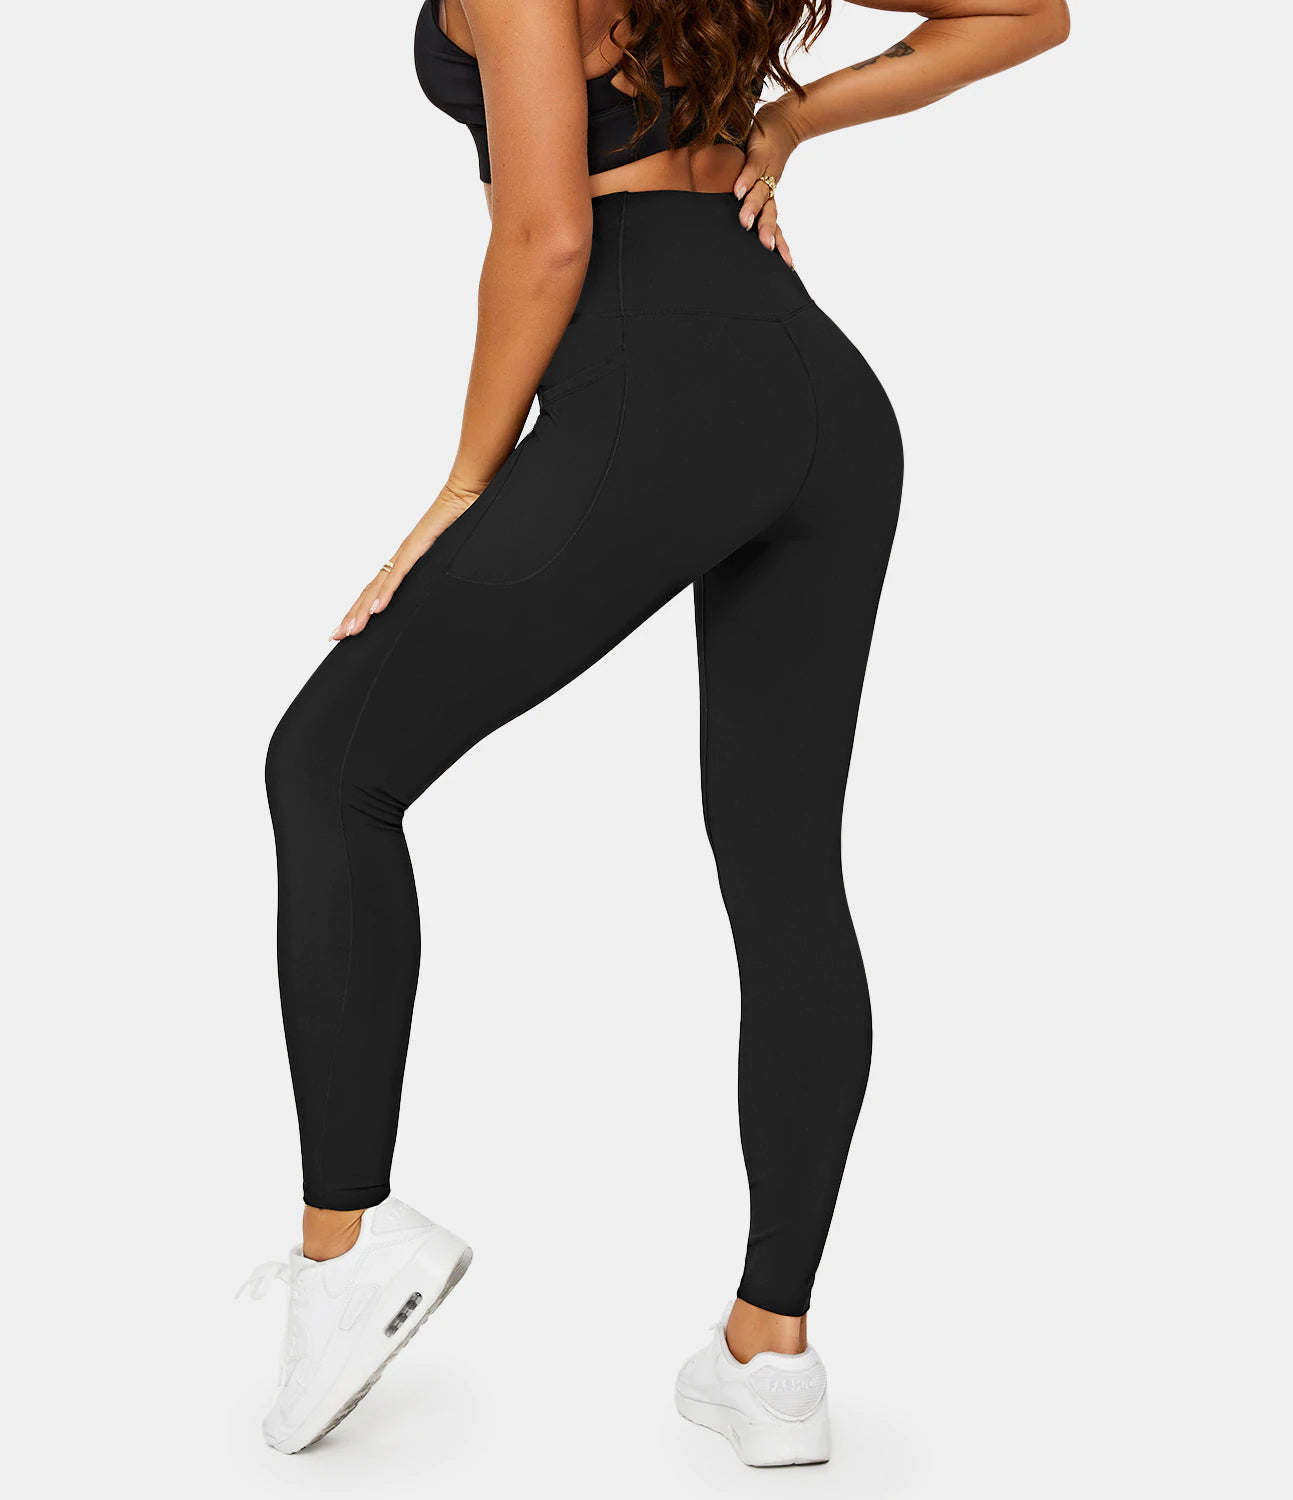 

Halara PatitoffВ® Pet Hair Resistant High Waisted Crossover Plain Leggings - Black Plum -  gym leggings leggings with pockets